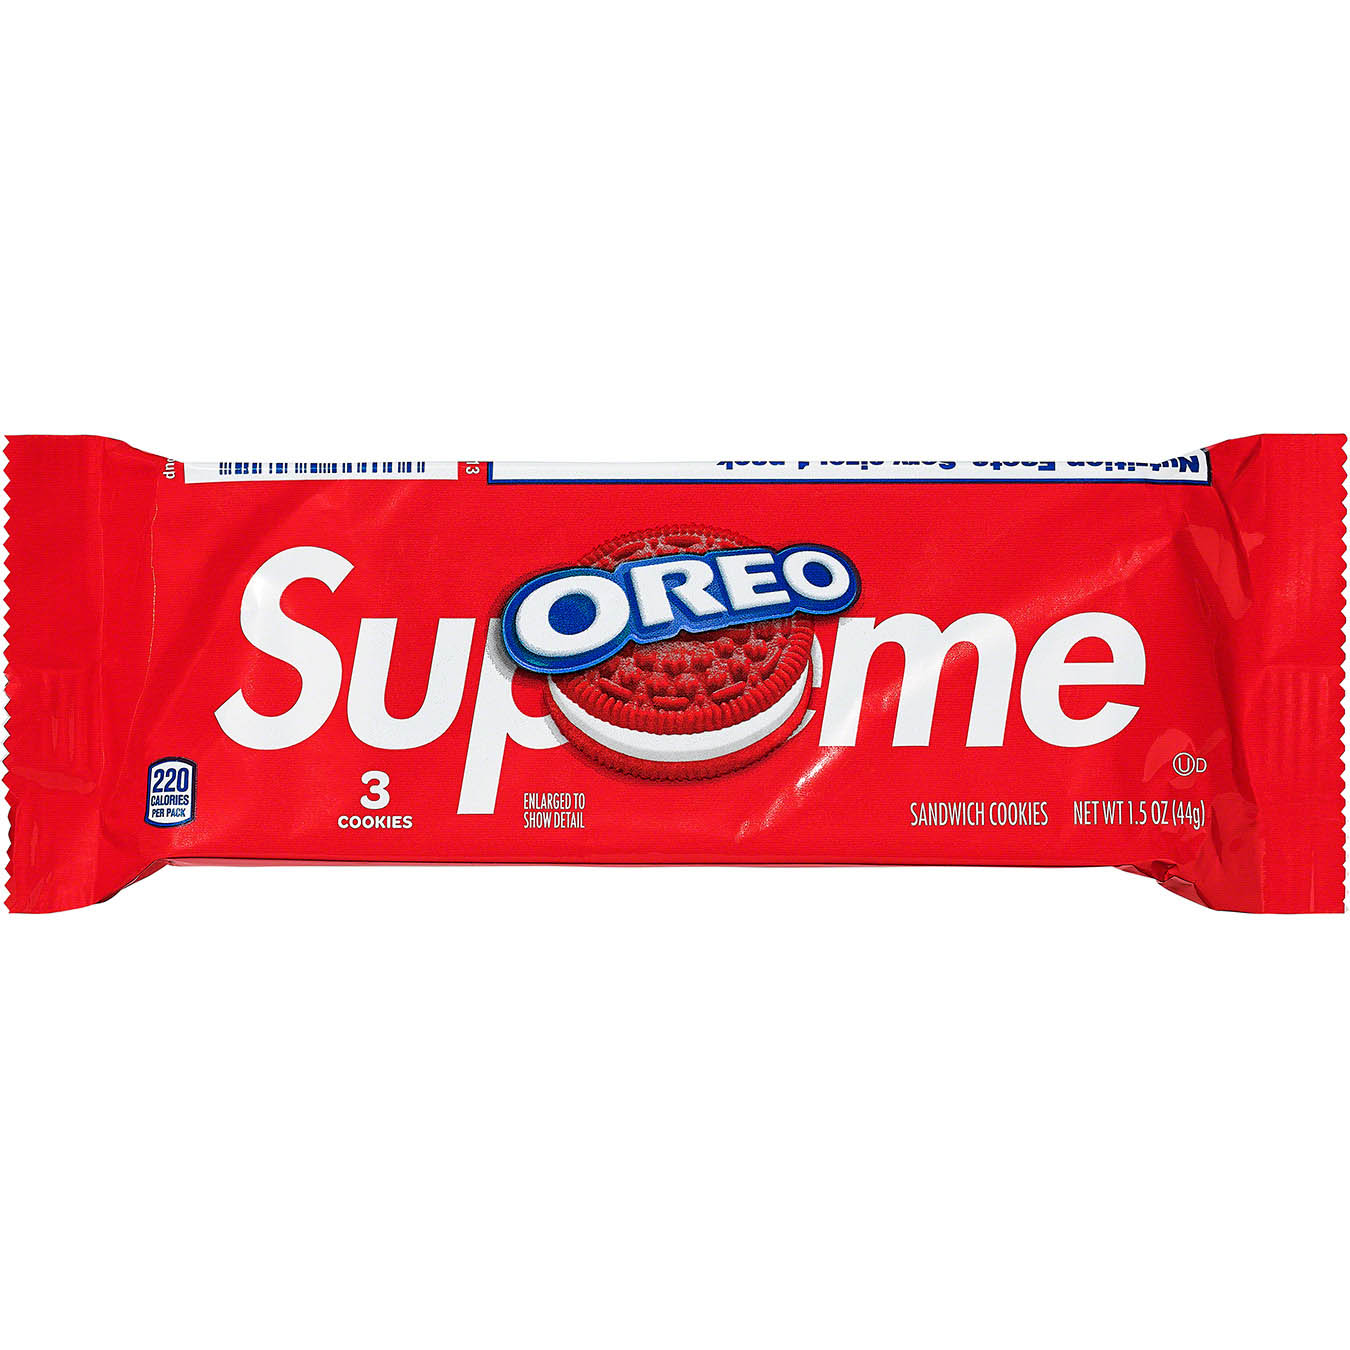 Supreme®/OREO Cookies (Pack of 3)